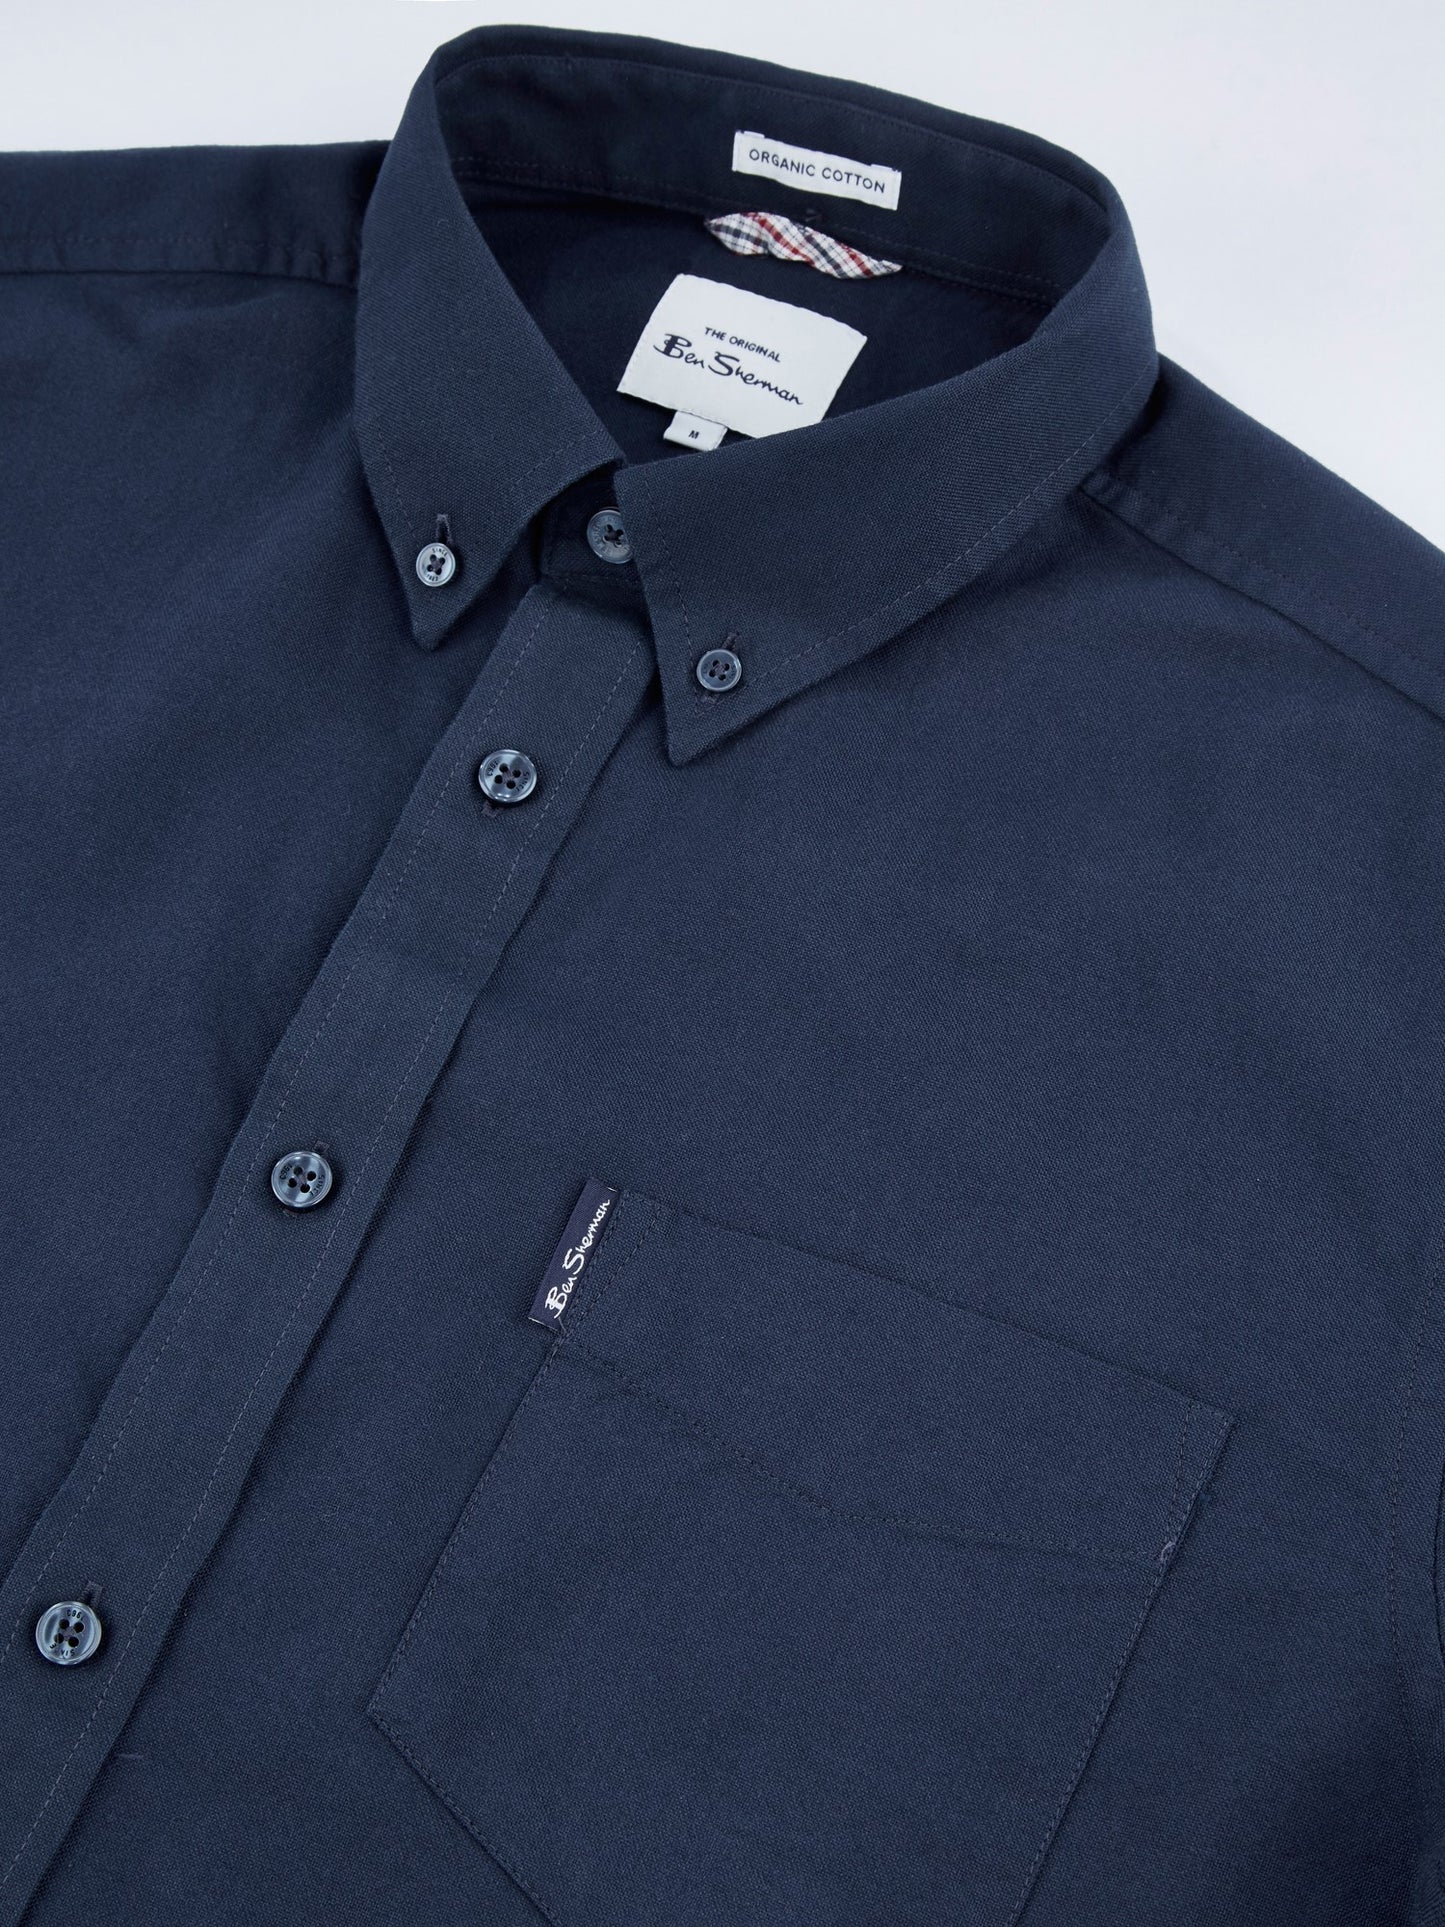 BigMens - Organic Cotton Short Sleeve Oxford Shirt - Dark Navy